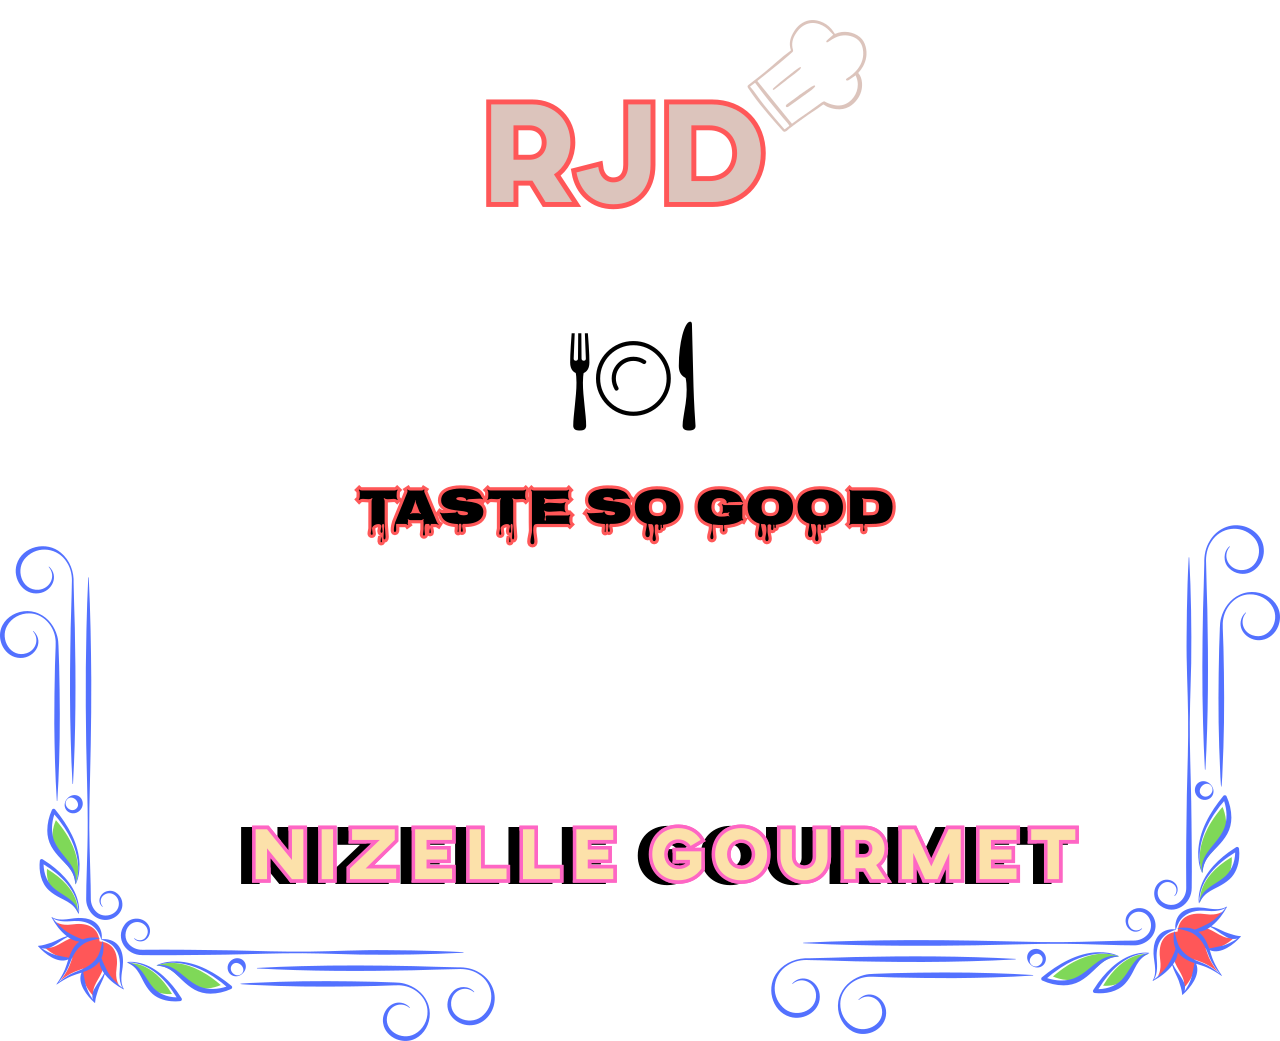 Nizelle gourmet 's logo